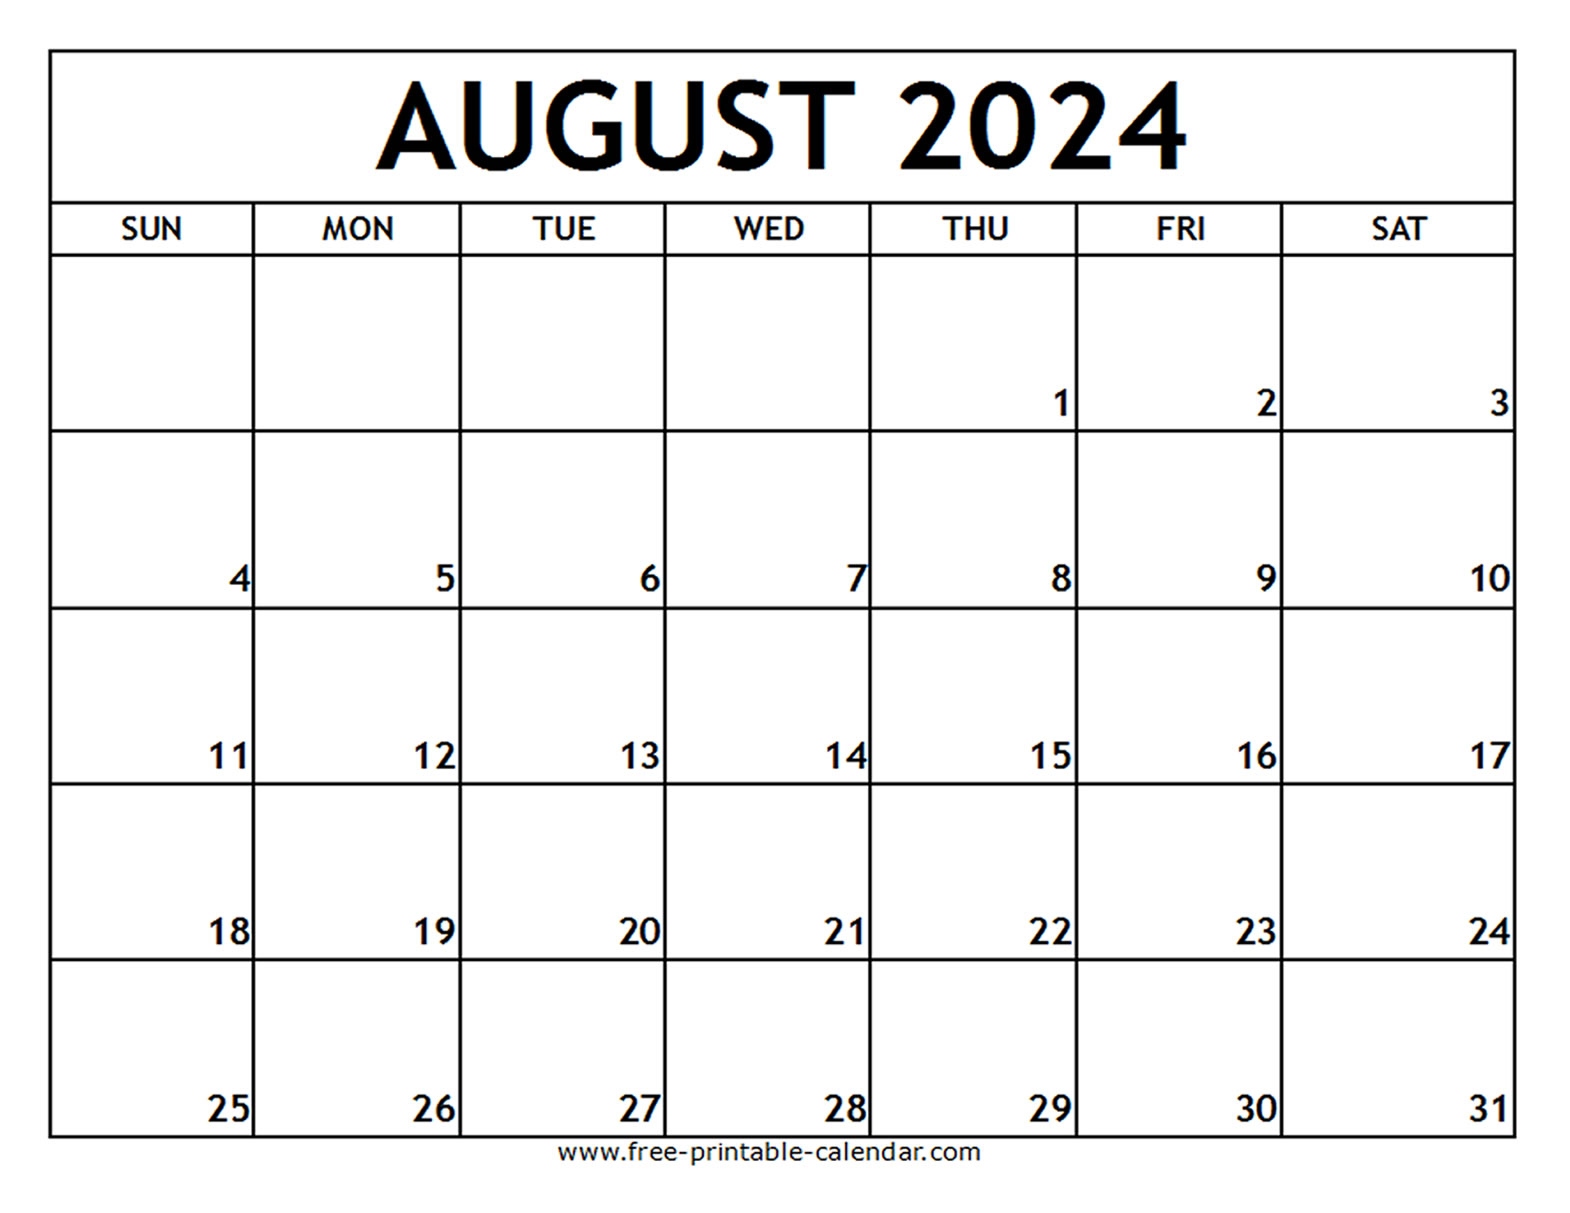 August 2024 Printable Calendar - Free-Printable-Calendar with Free Printable August 2024 Calendar